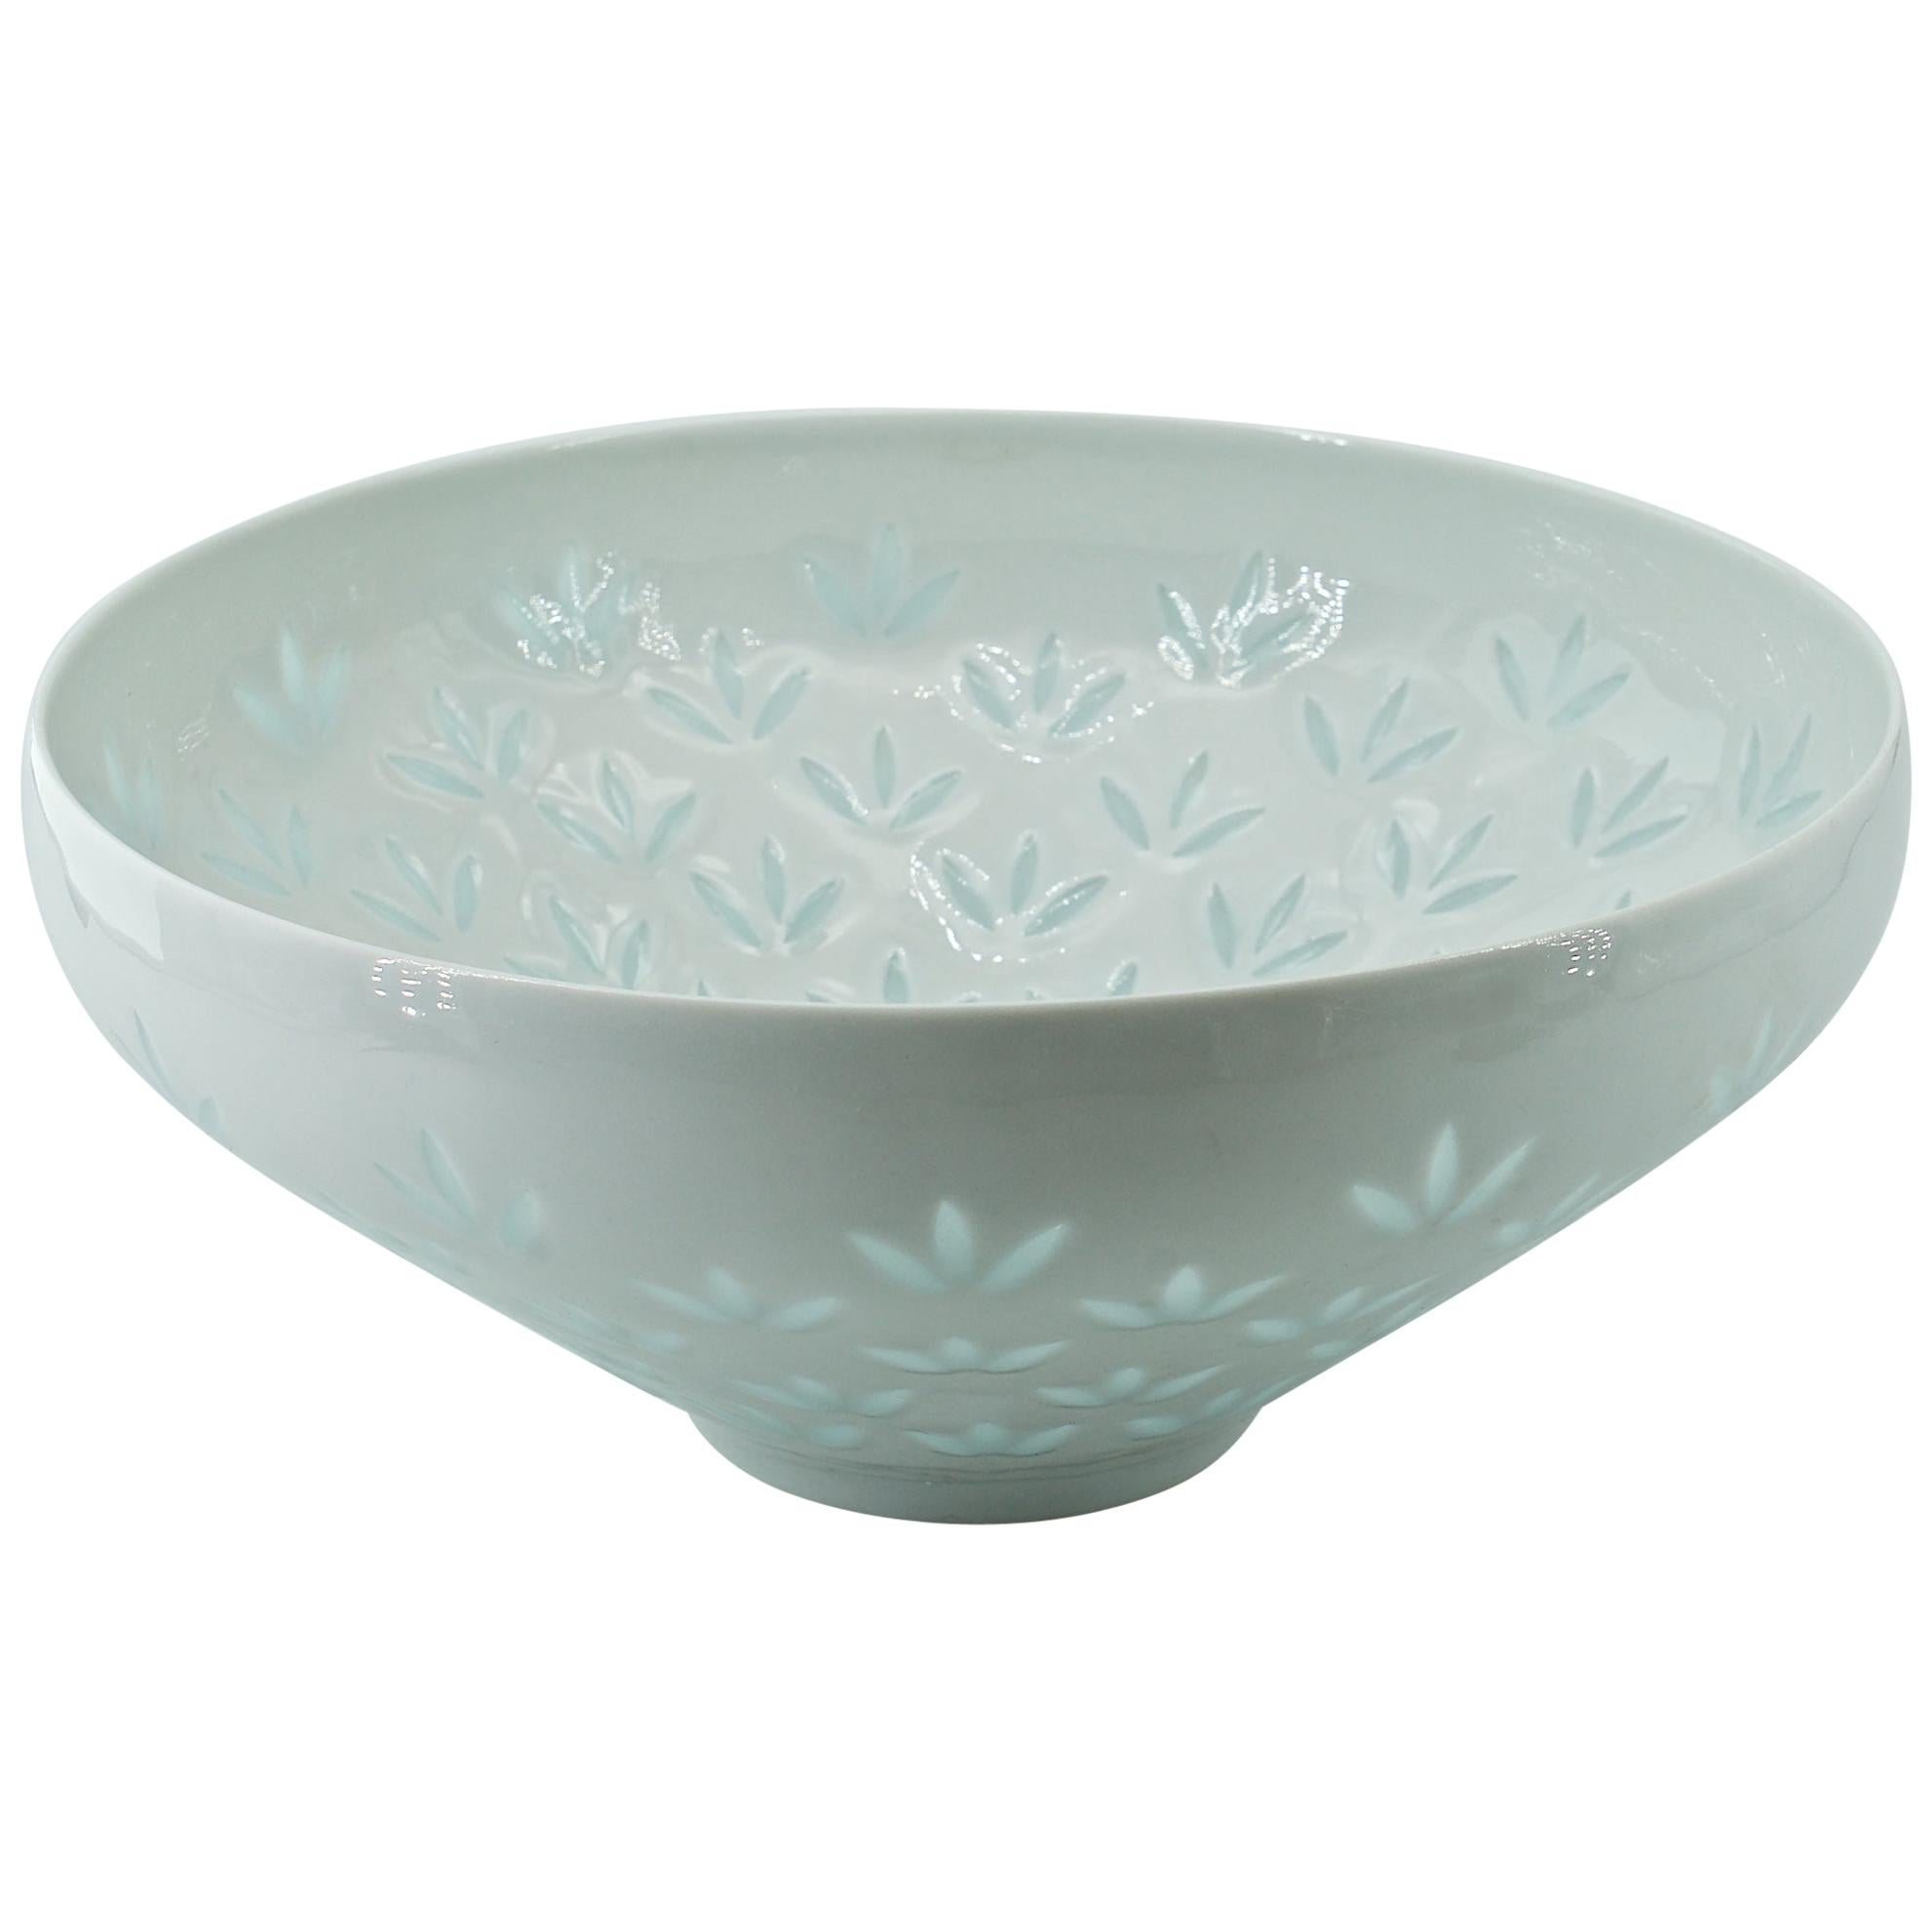 Female Scandinavian Design Chinese Patterned Porcelain Centerpiece Bowl, Finland